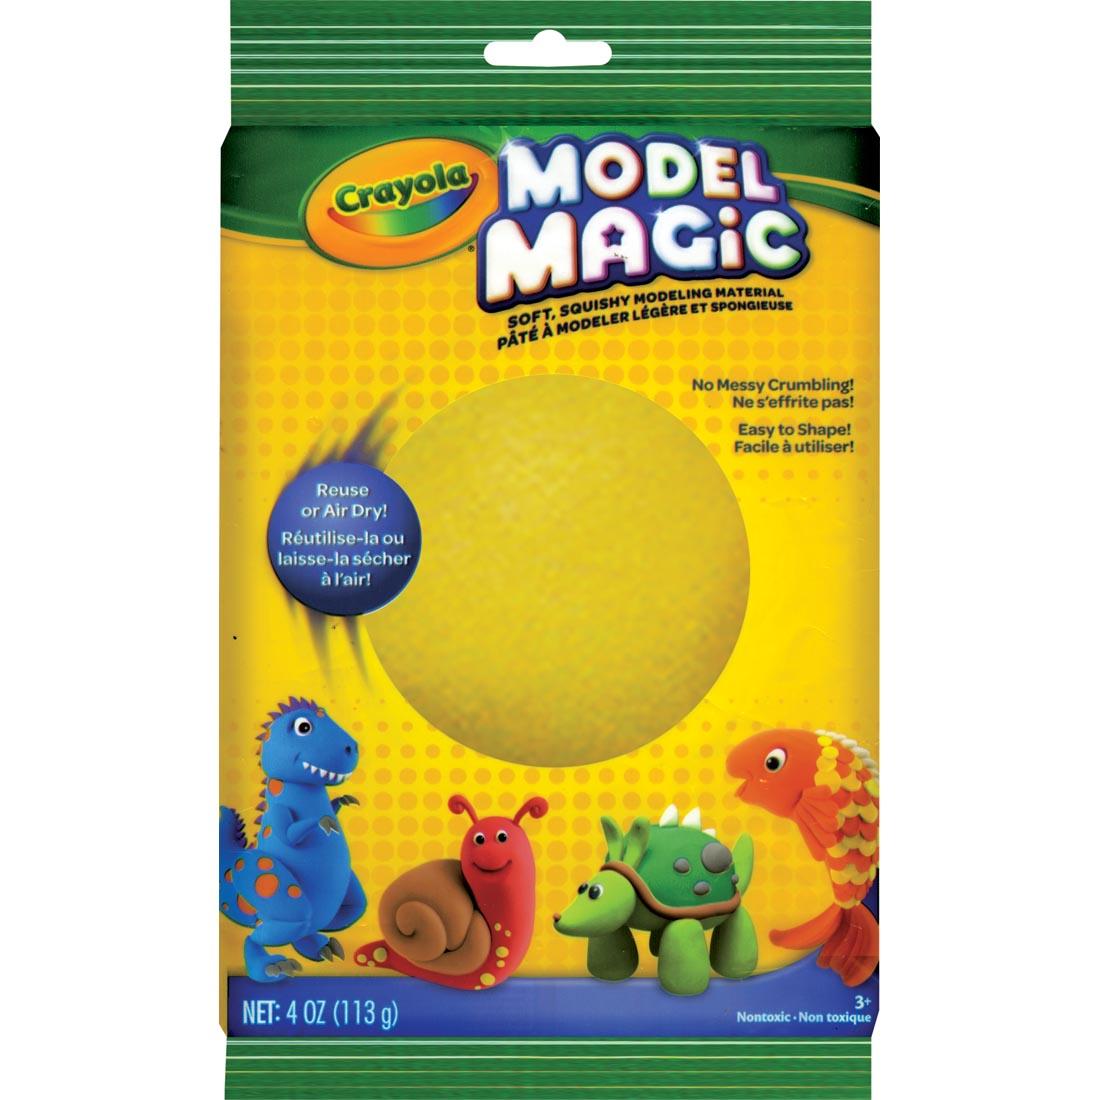 Package of Yellow Crayola Model Magic